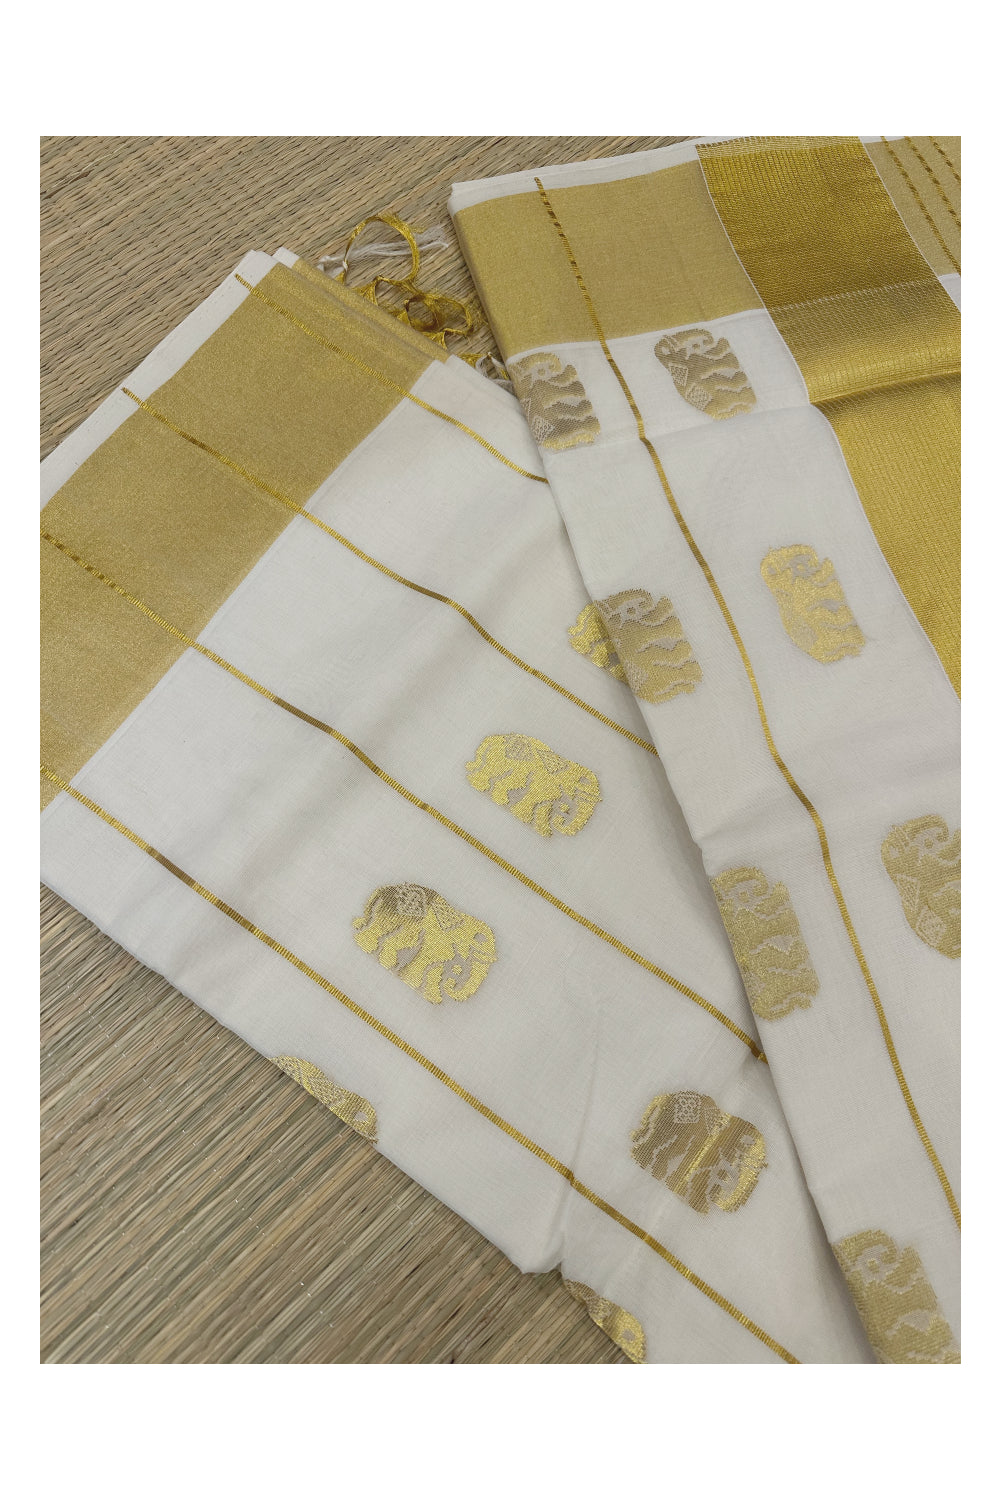 Southloom Premium Handloom Cotton Kasavu Saree with Elephant Woven Designs on Body